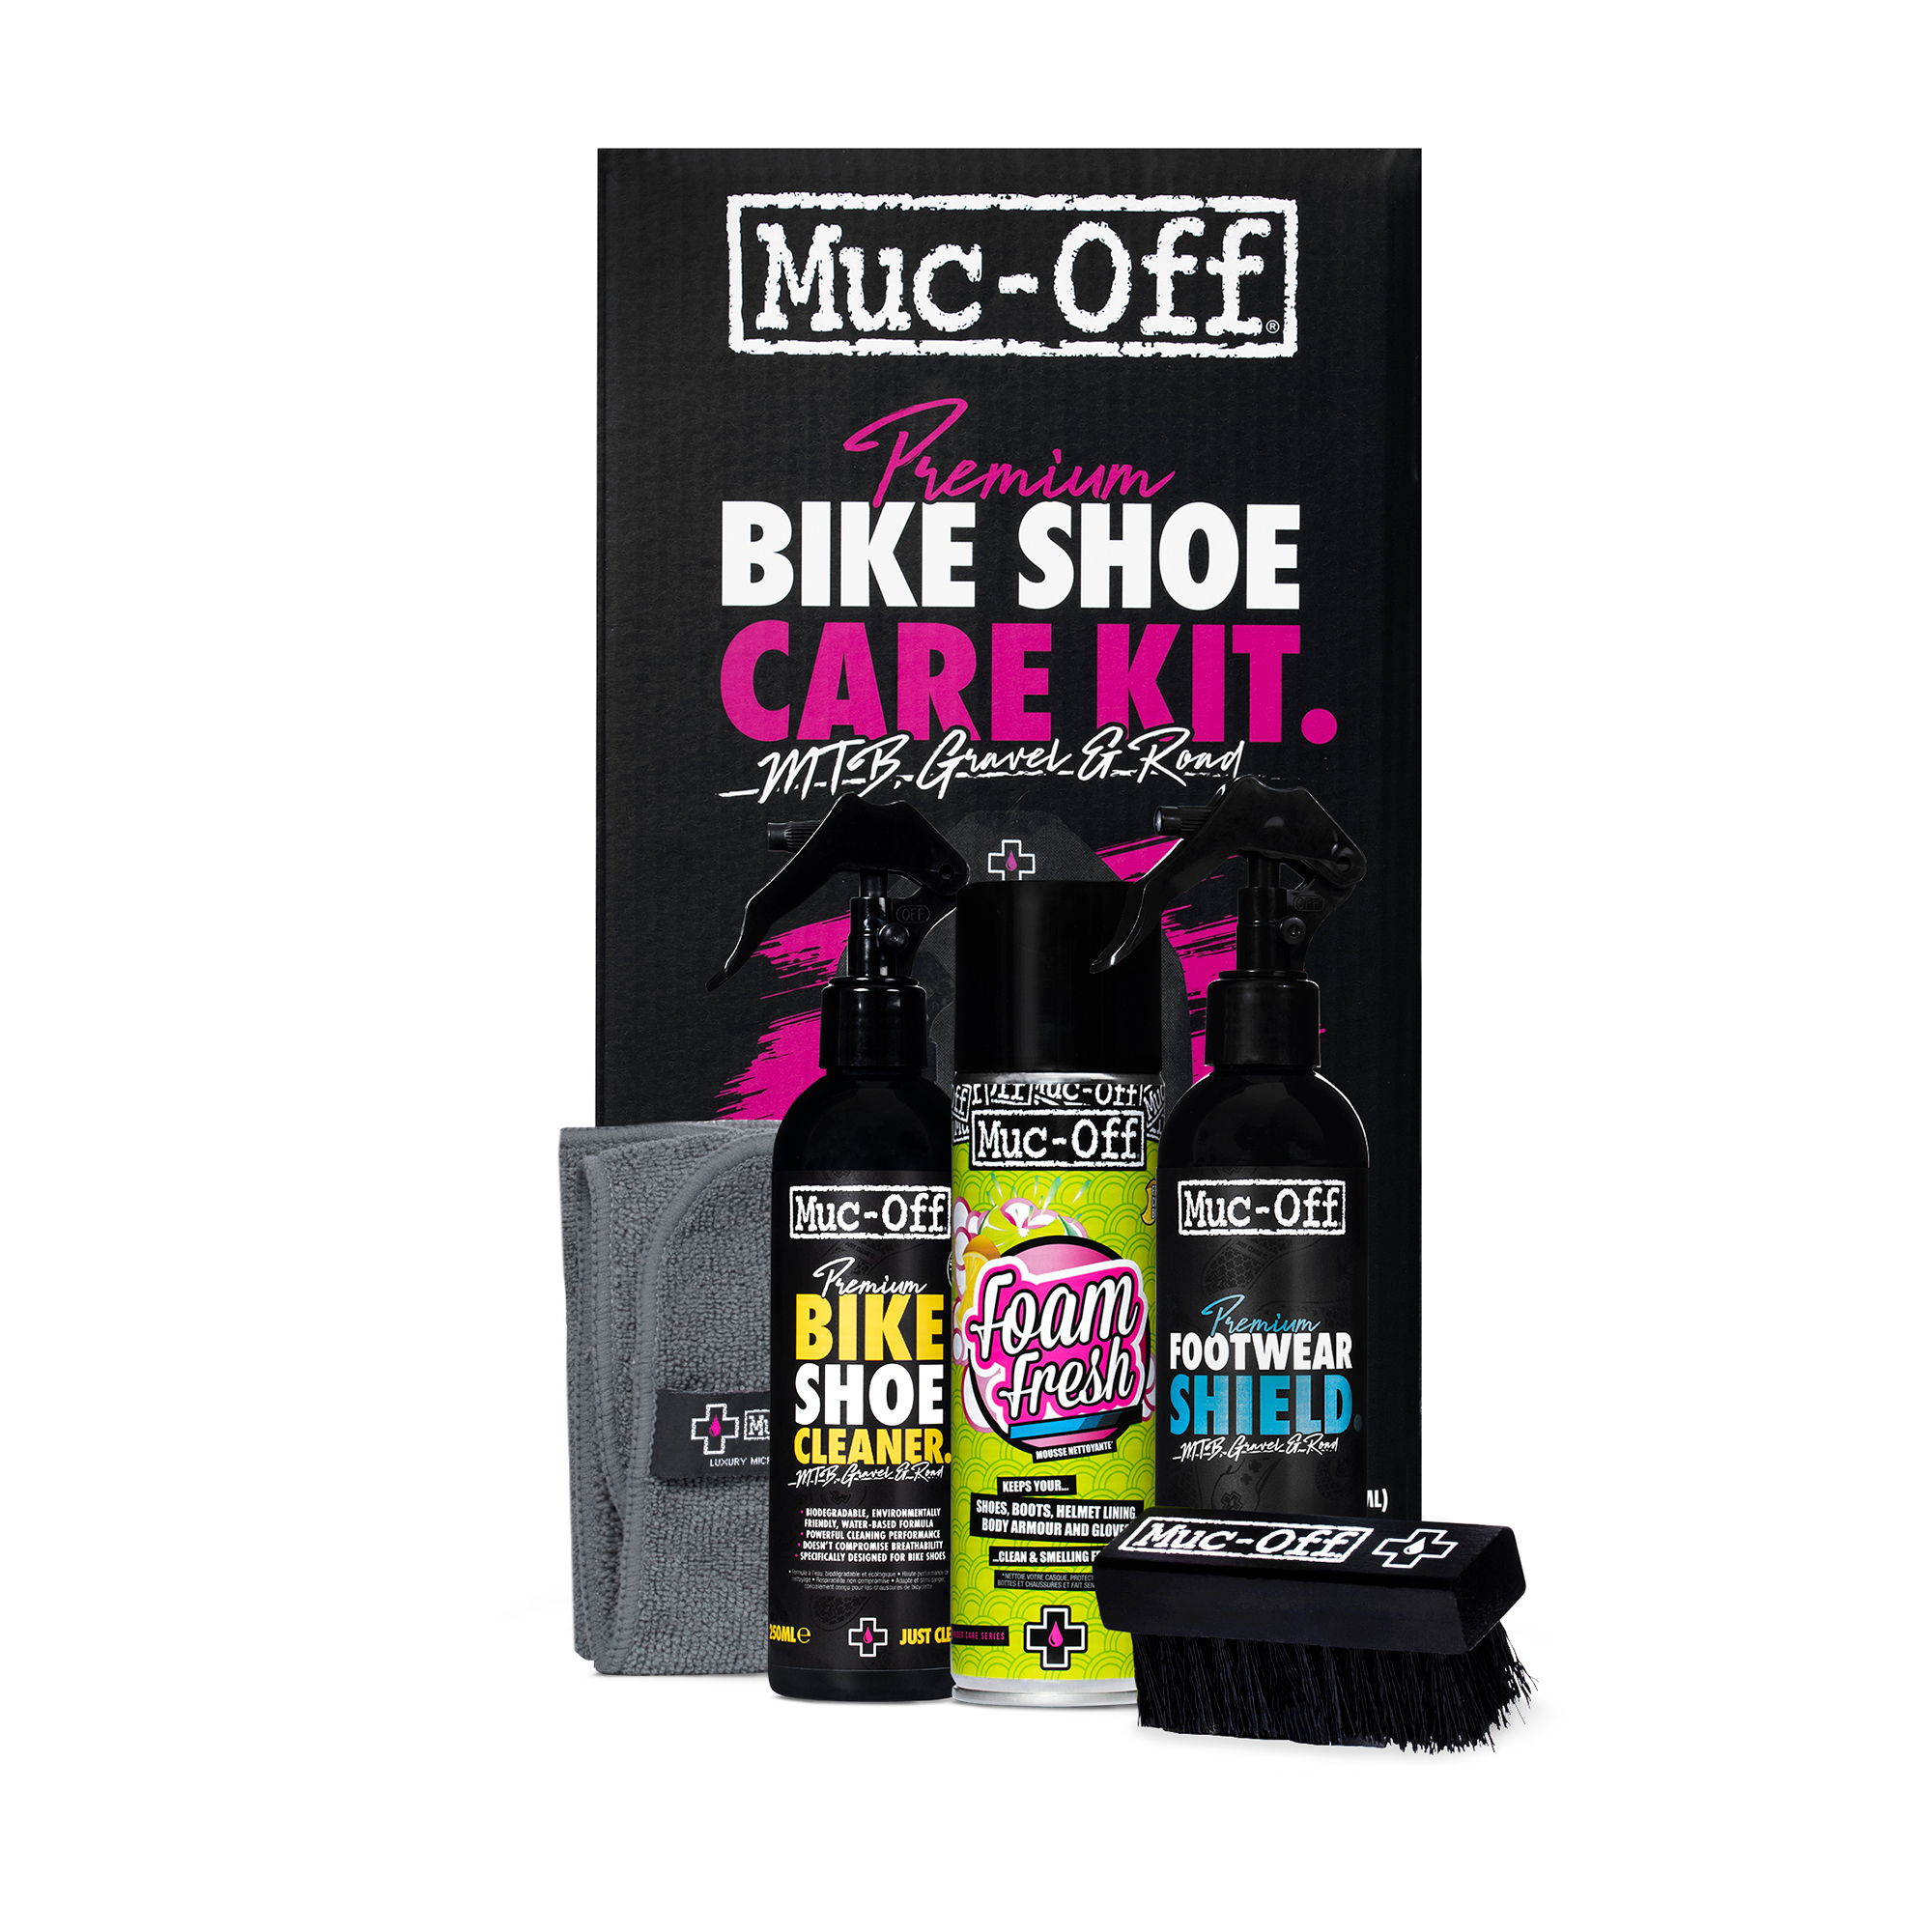 muc-off-premium-bike-shoe-care-kit